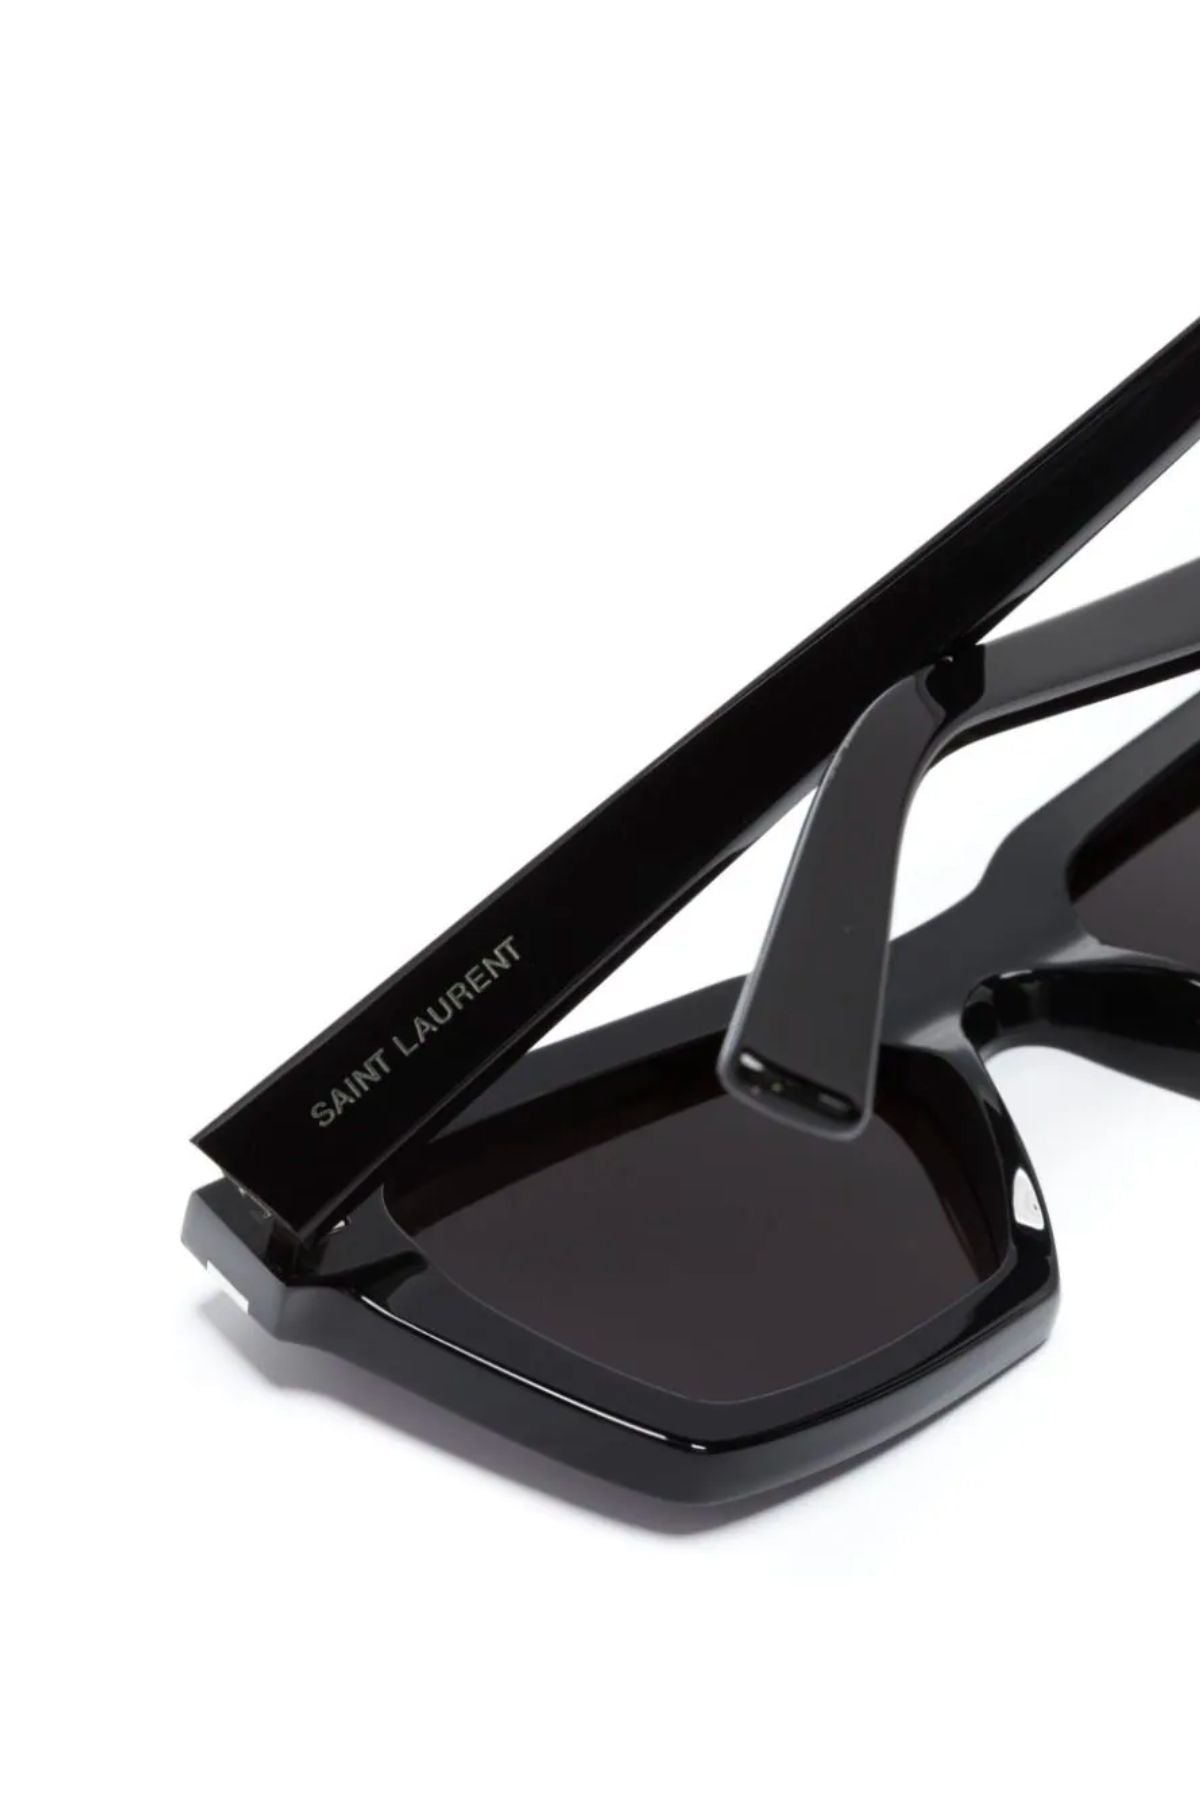 Saint Laurent Calista Sunglasses - Black